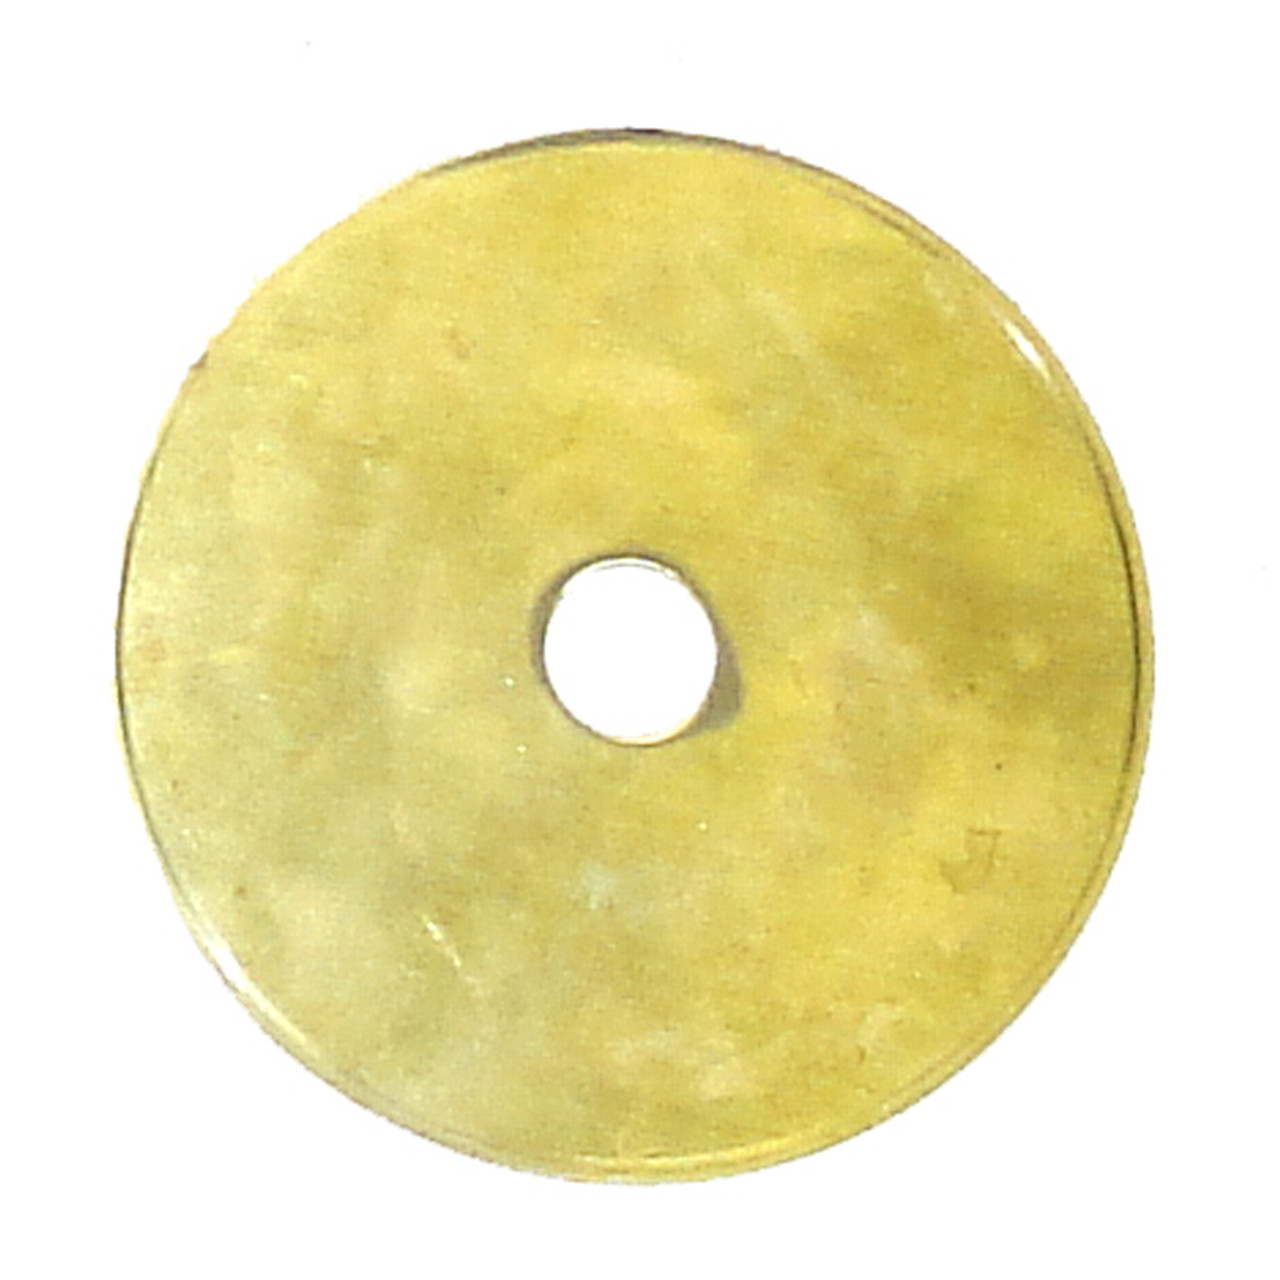 Kolstrand Brass Brake Disc for Standard Hand Gurdy - Piece 15